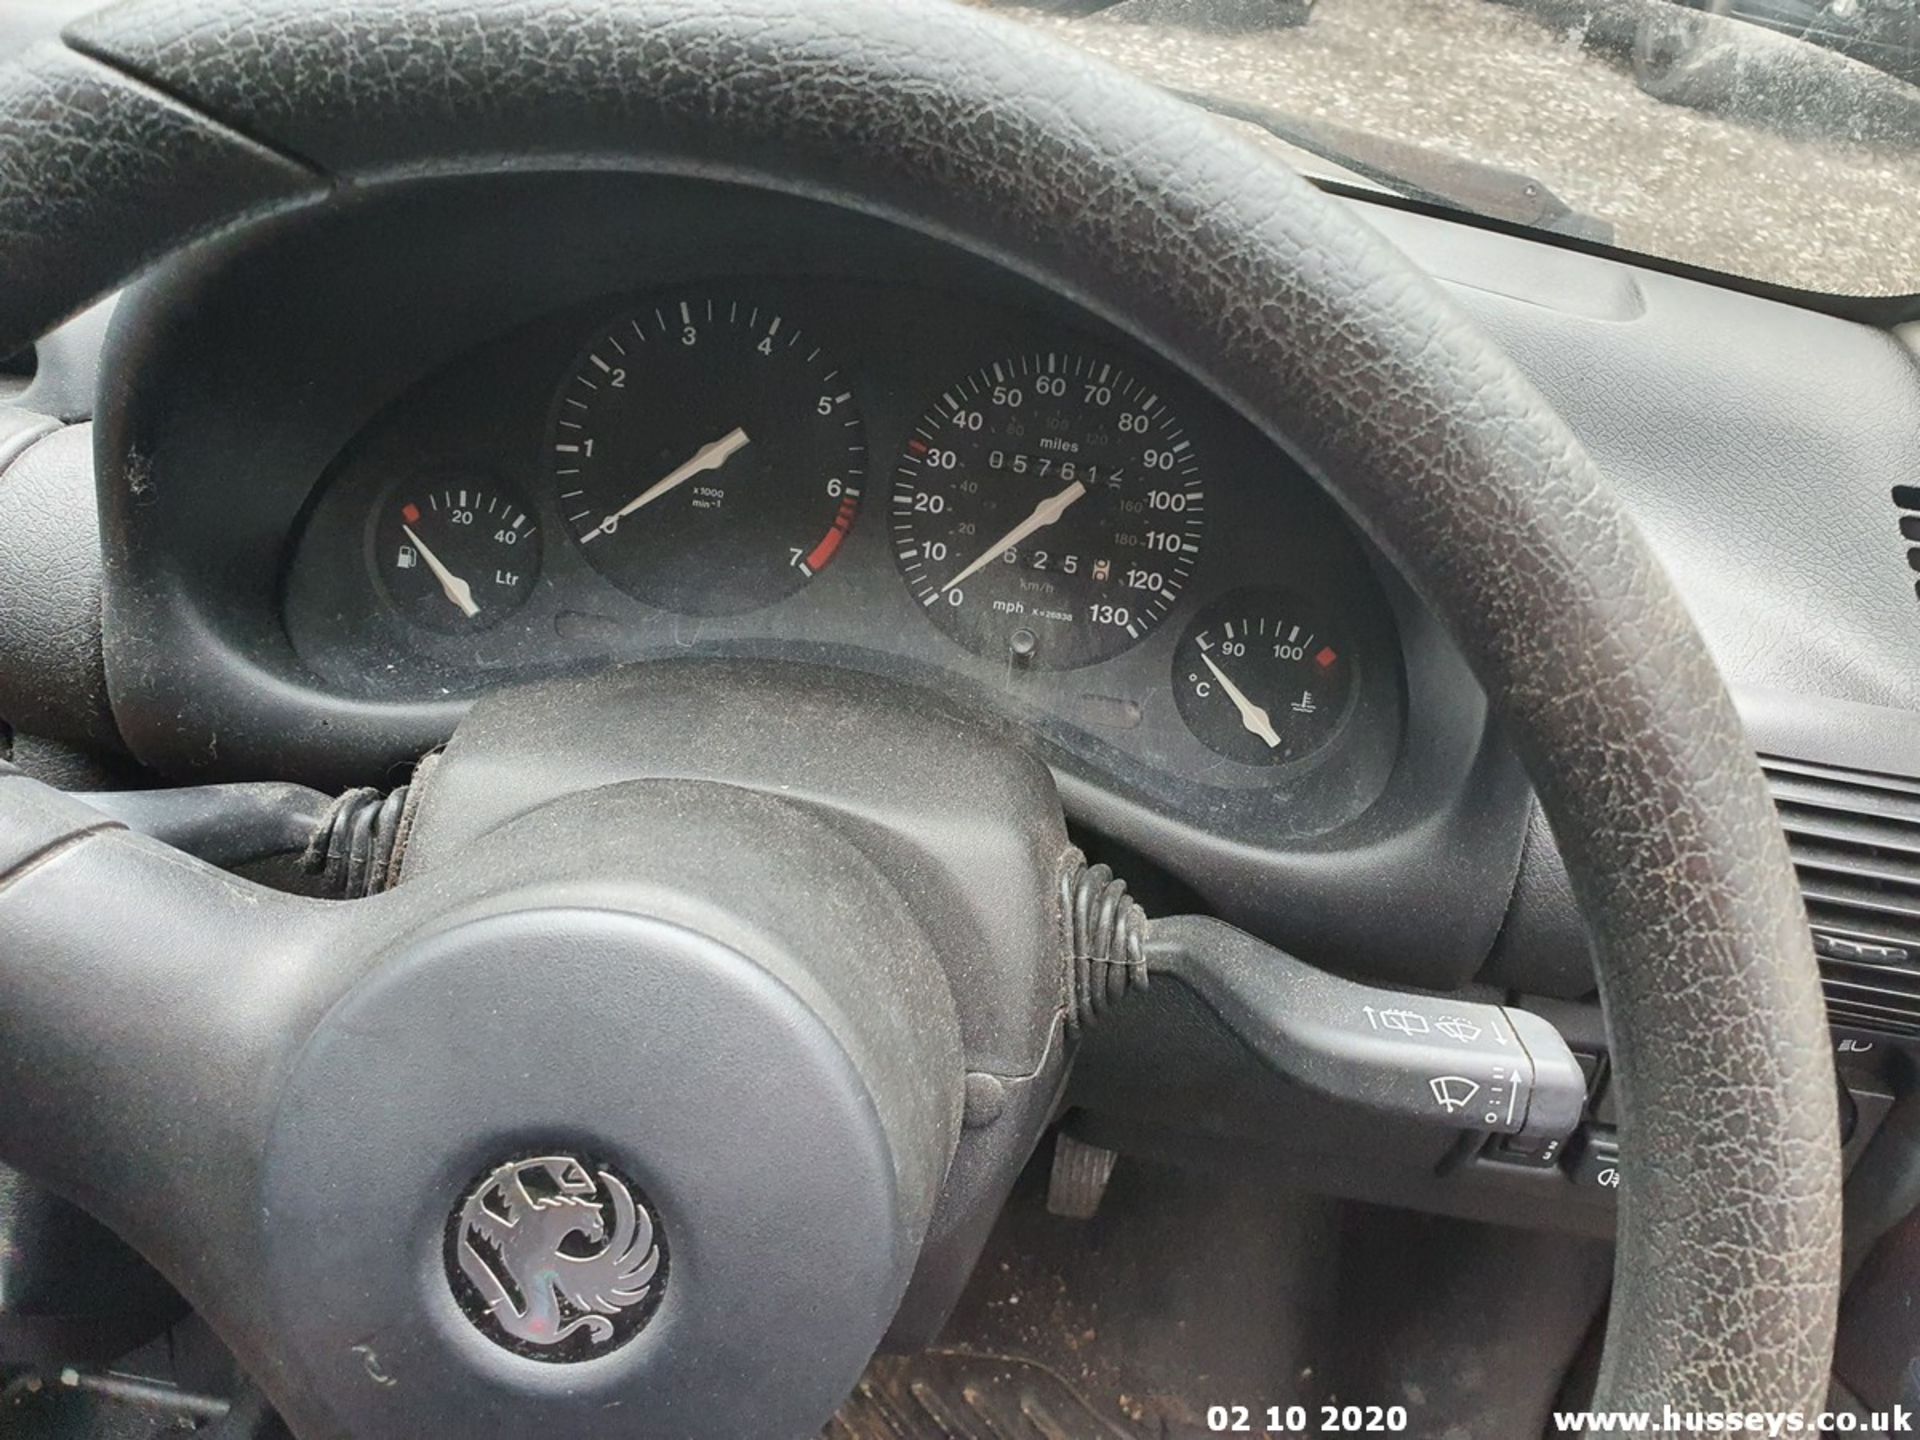 1998 VAUXHALL CORSA BREEZE HI-TORQ - 1389cc 5dr Hatchback (Silver, 57k) - Image 2 of 7